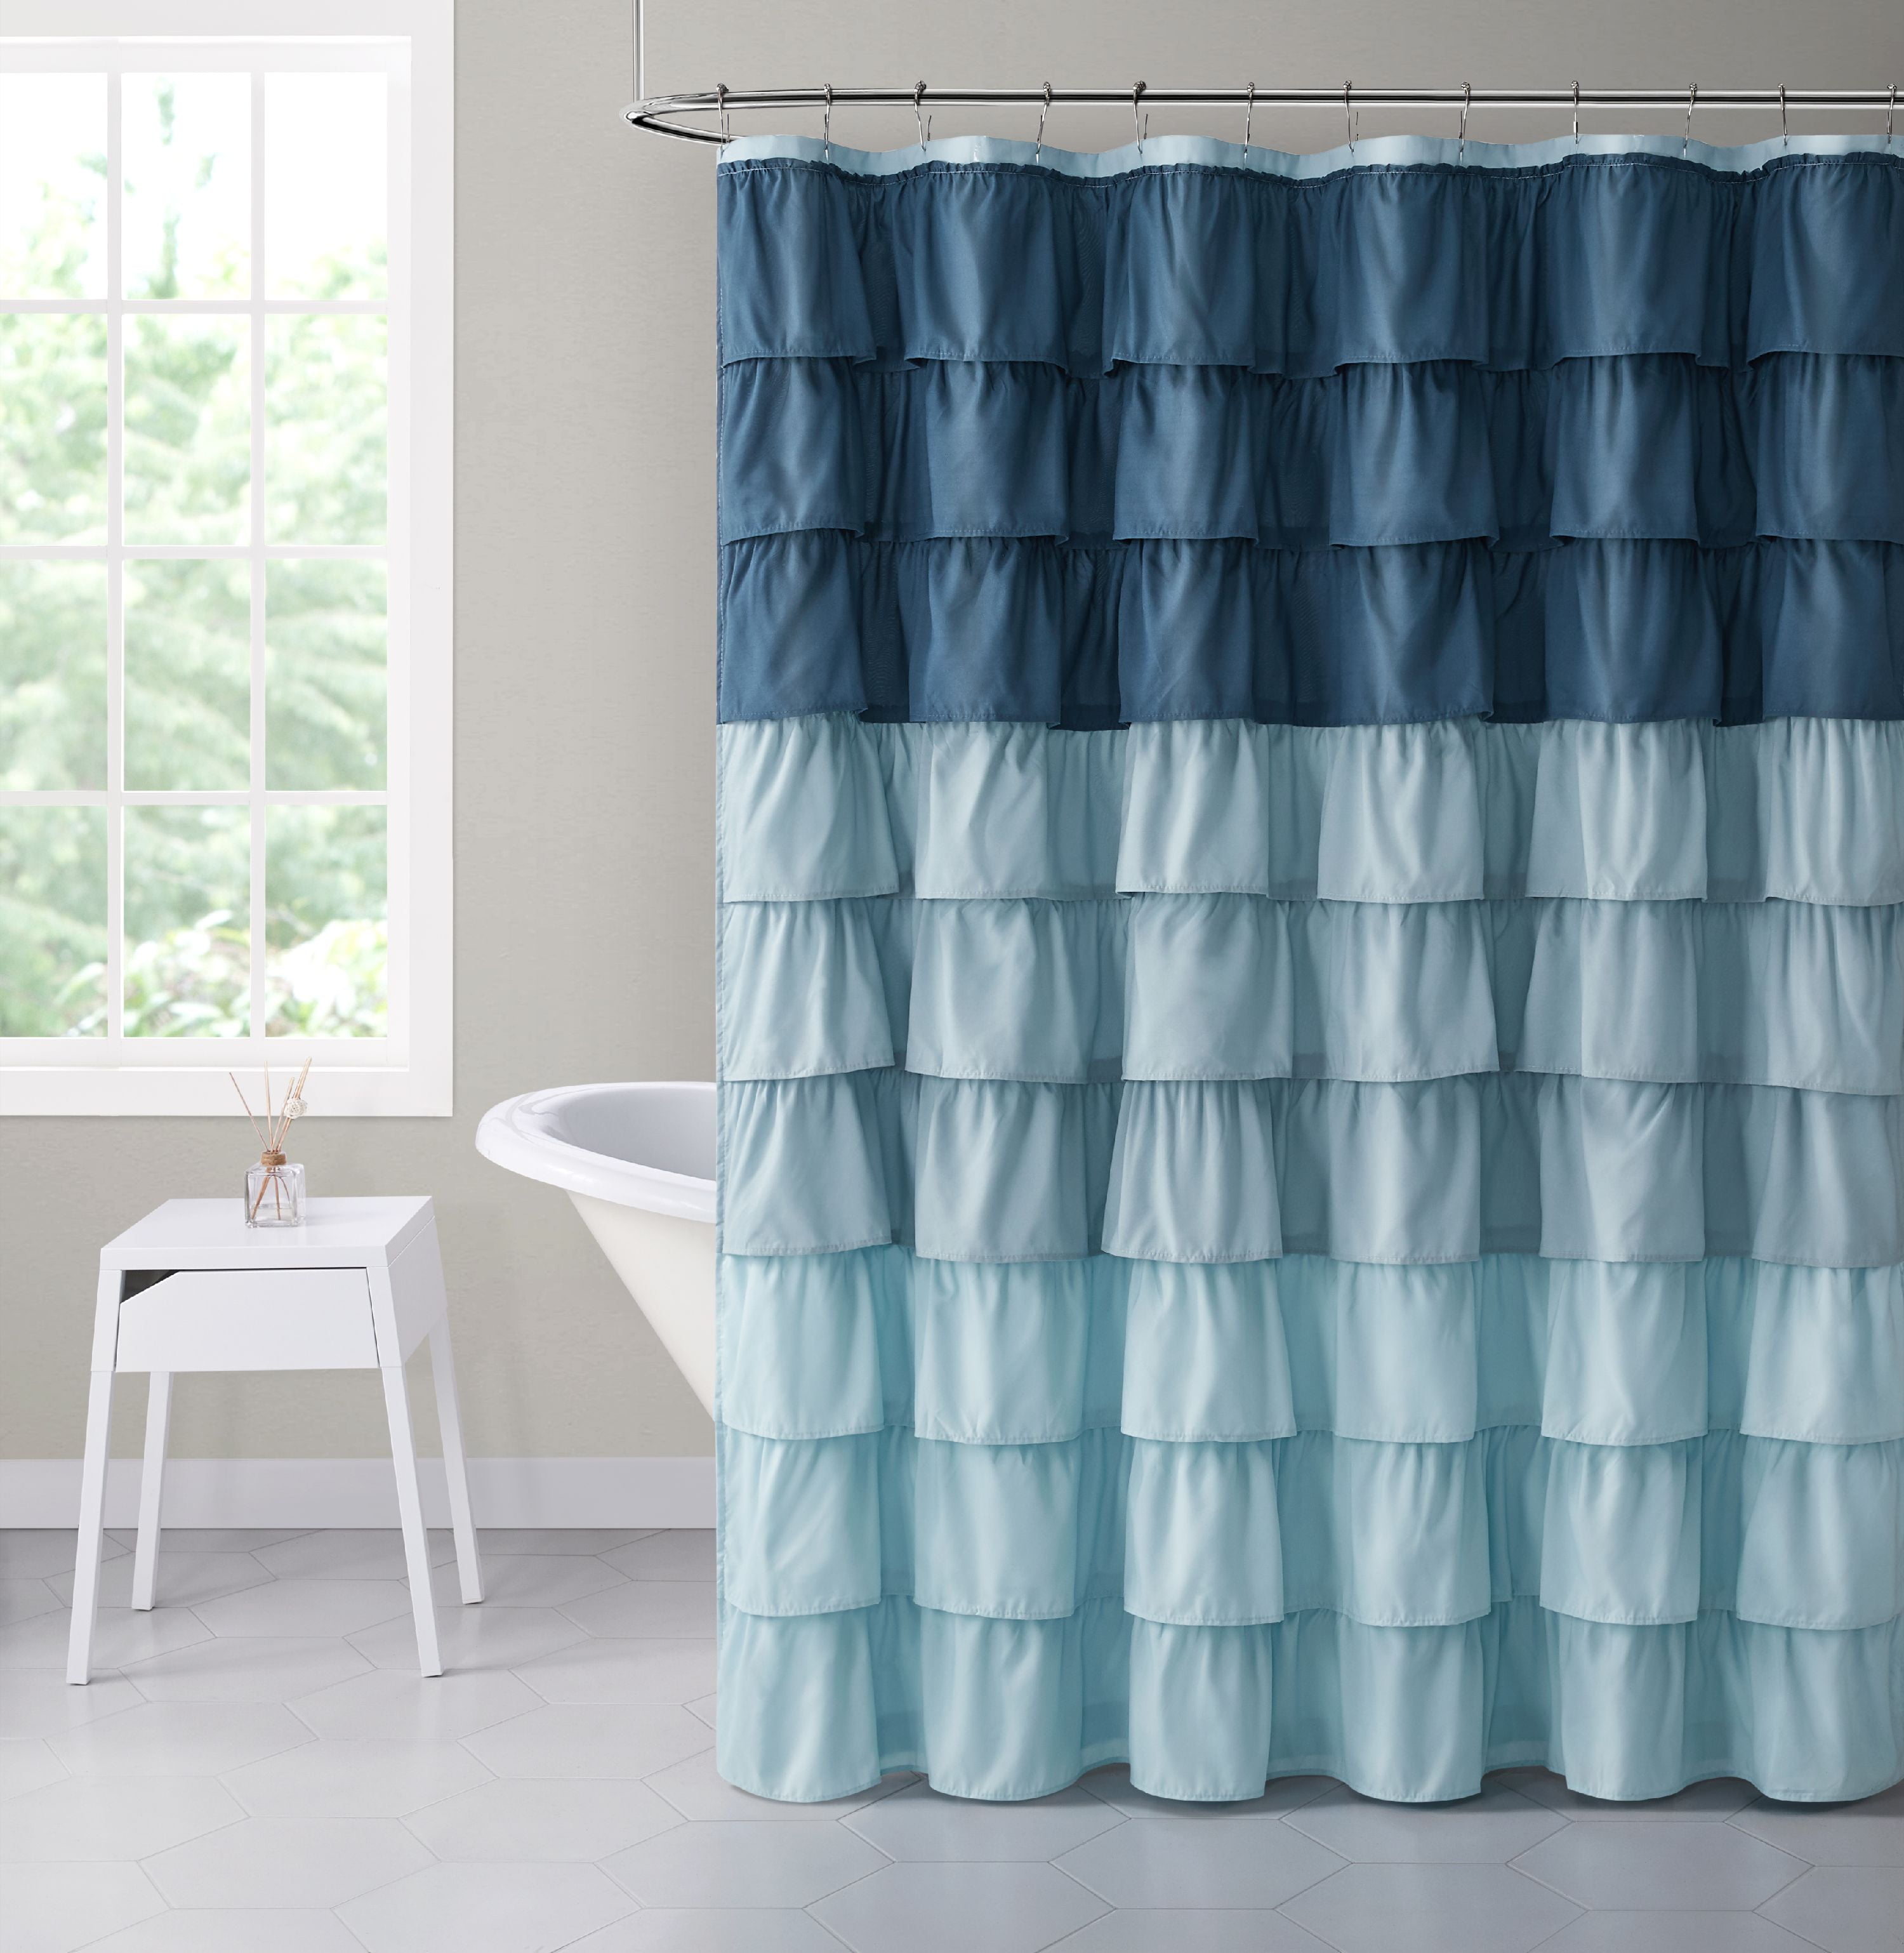 Shabby Ruffled Fabric Shower Curtain - Blue - Walmart.com - Walmart.com